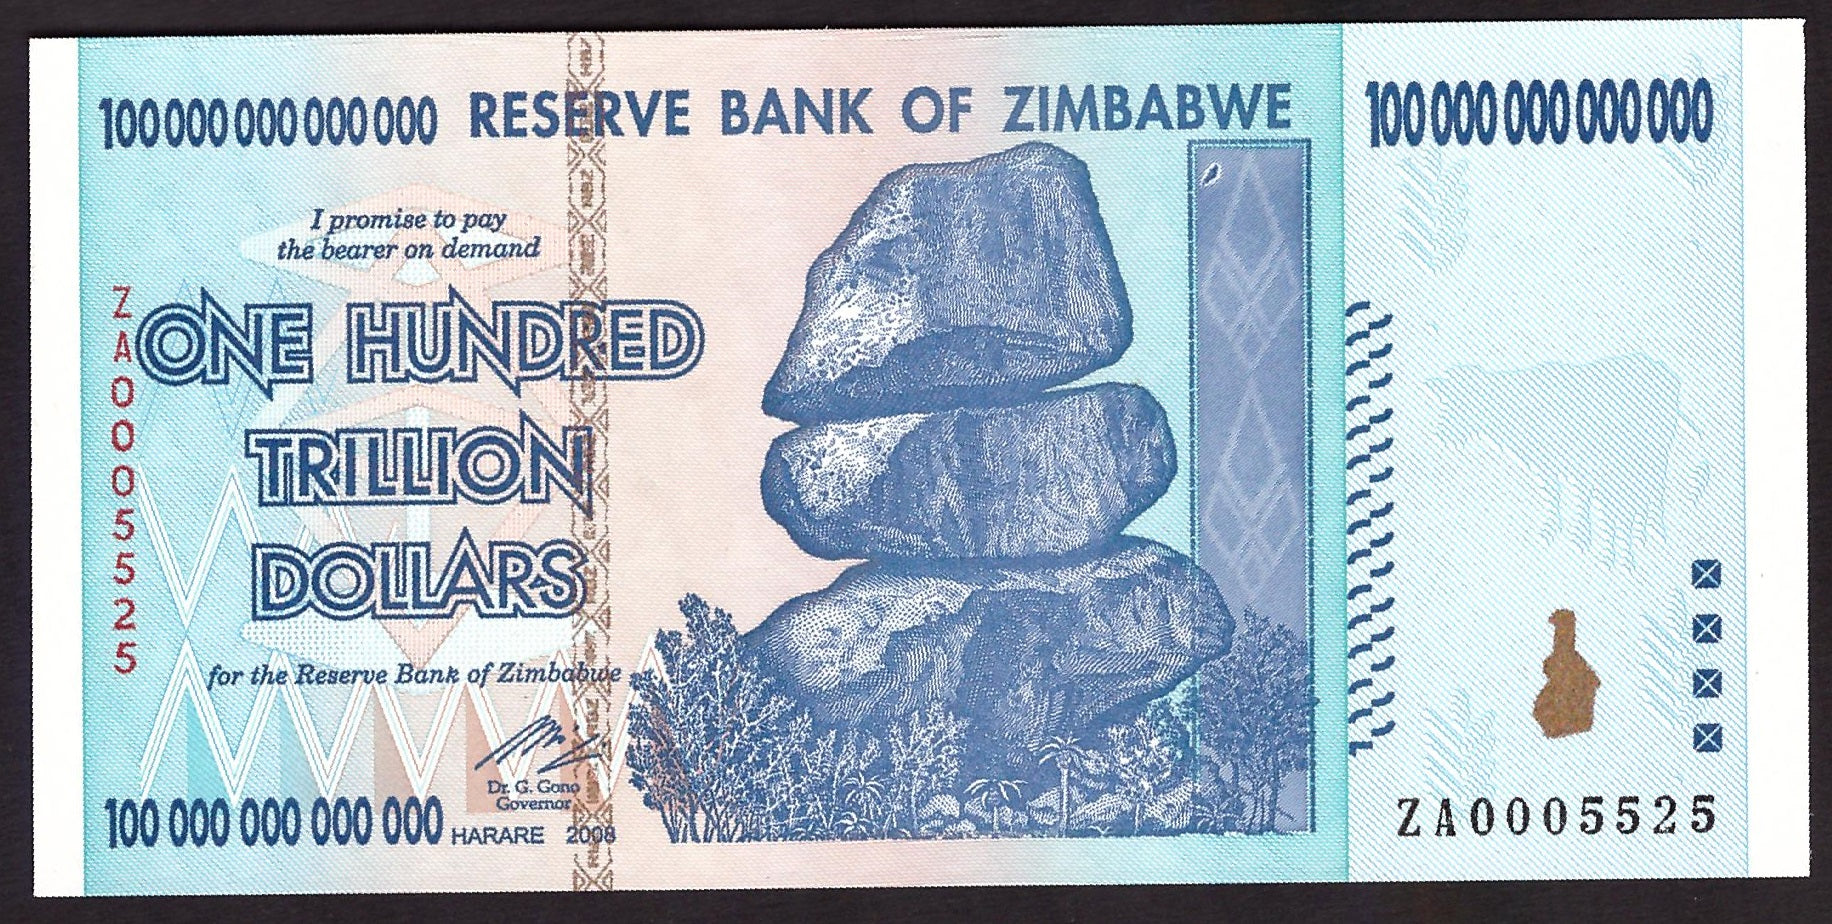  zimbabwe bitcoin making comeback series crises currency 